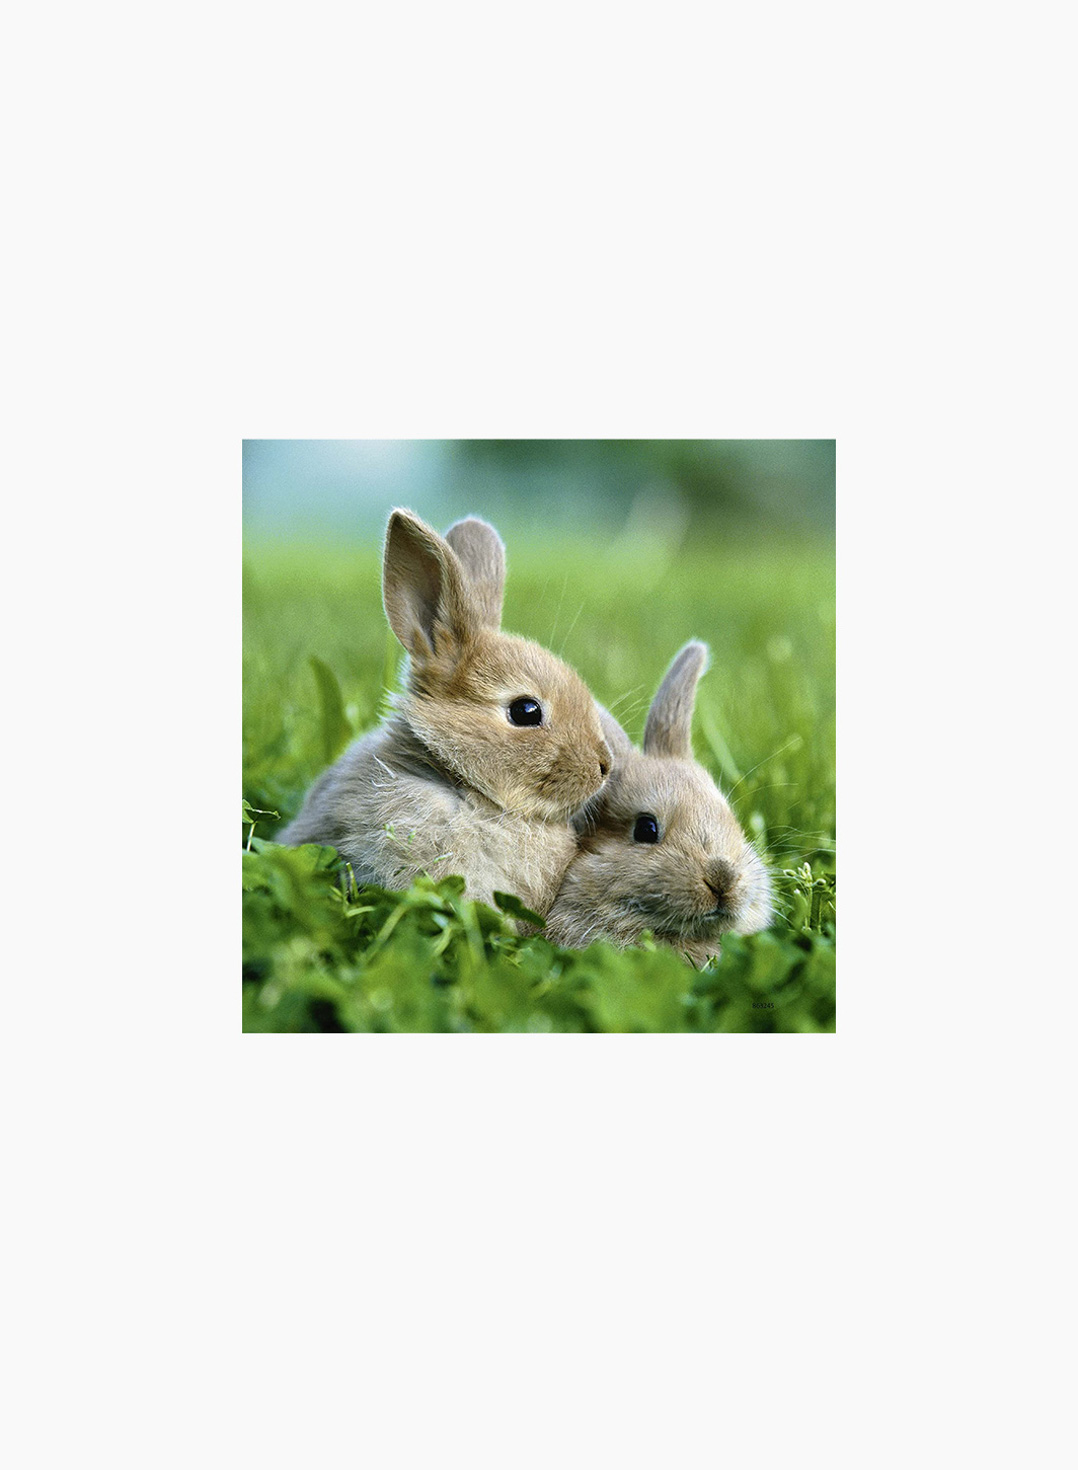 Ravensburger Puzzle Cute Bunnies 3x49p